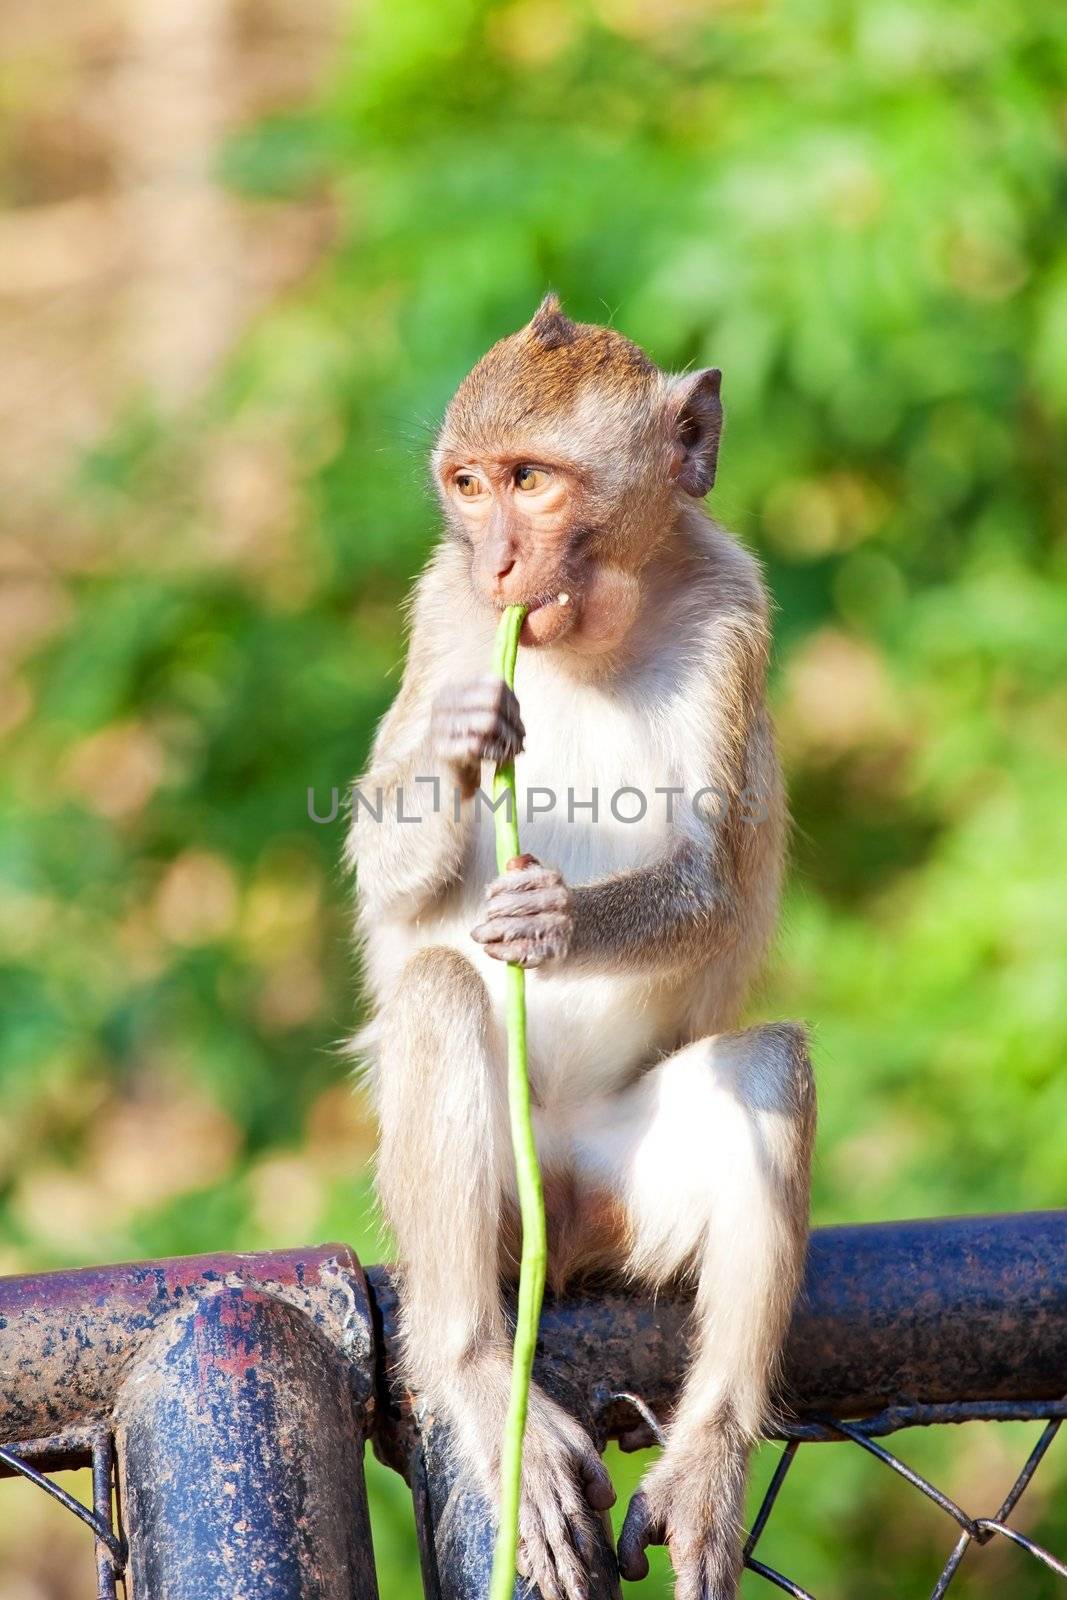 Monkey eating by witthaya